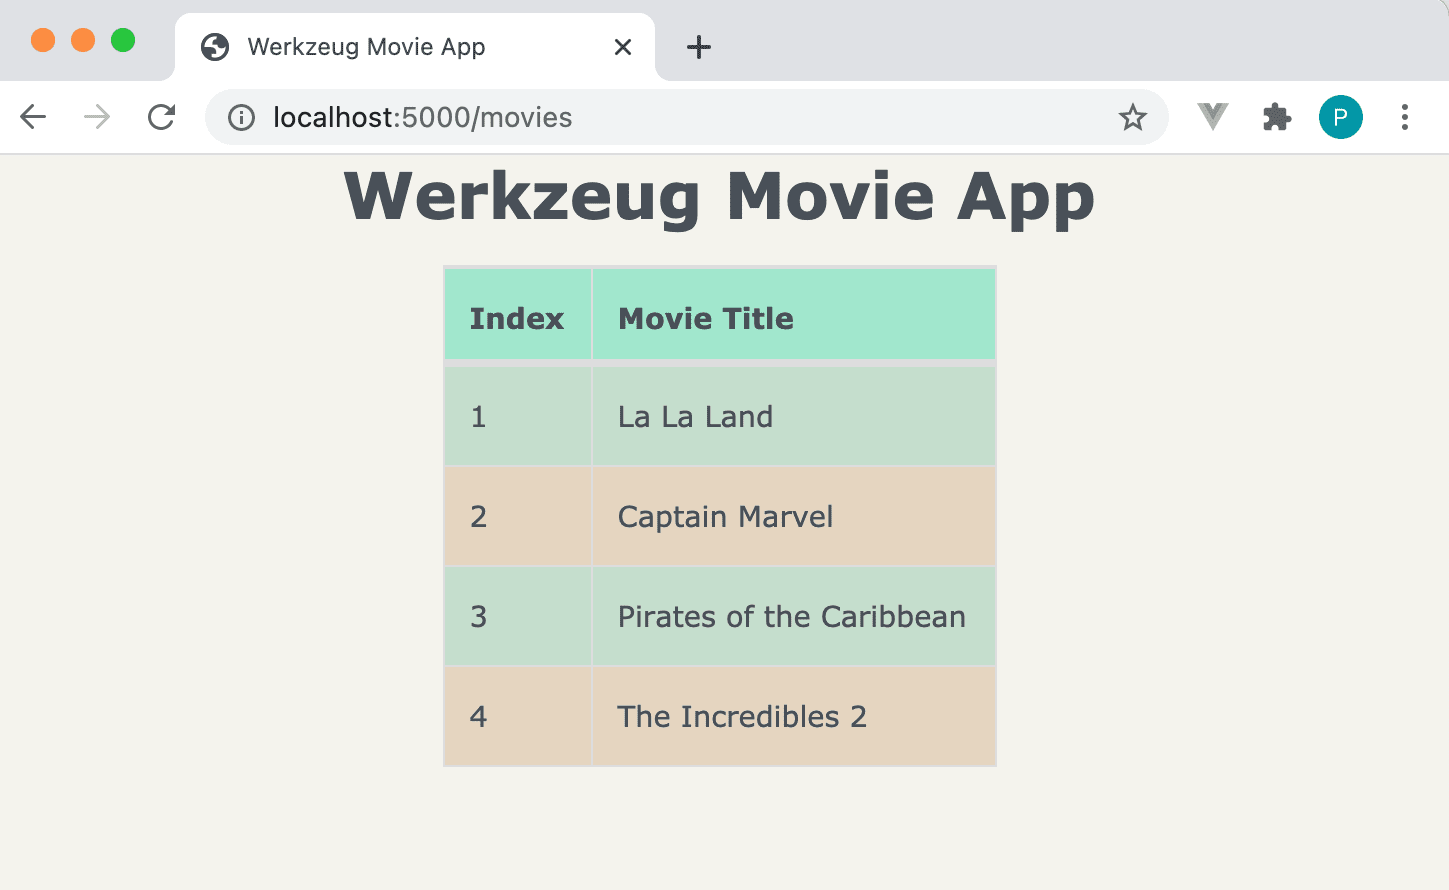 Werkeug Website Example listing 4 movies